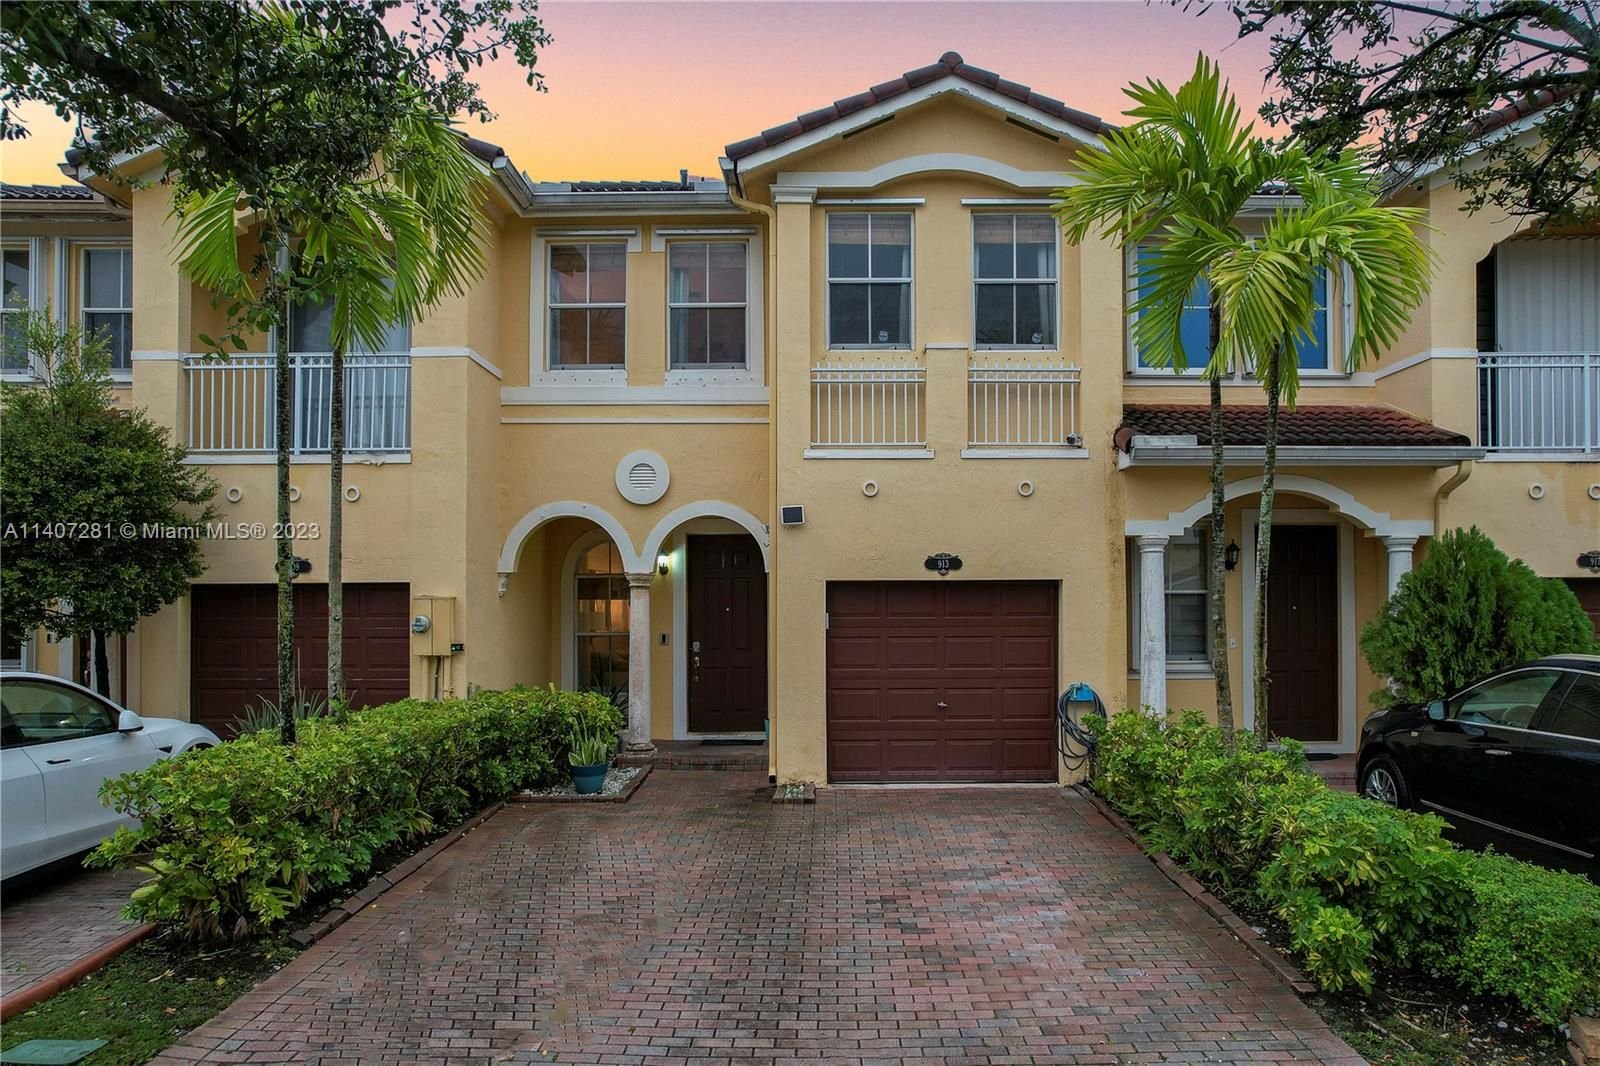 Real estate property located at 913 149th Ct #913, Miami-Dade County, Miami, FL